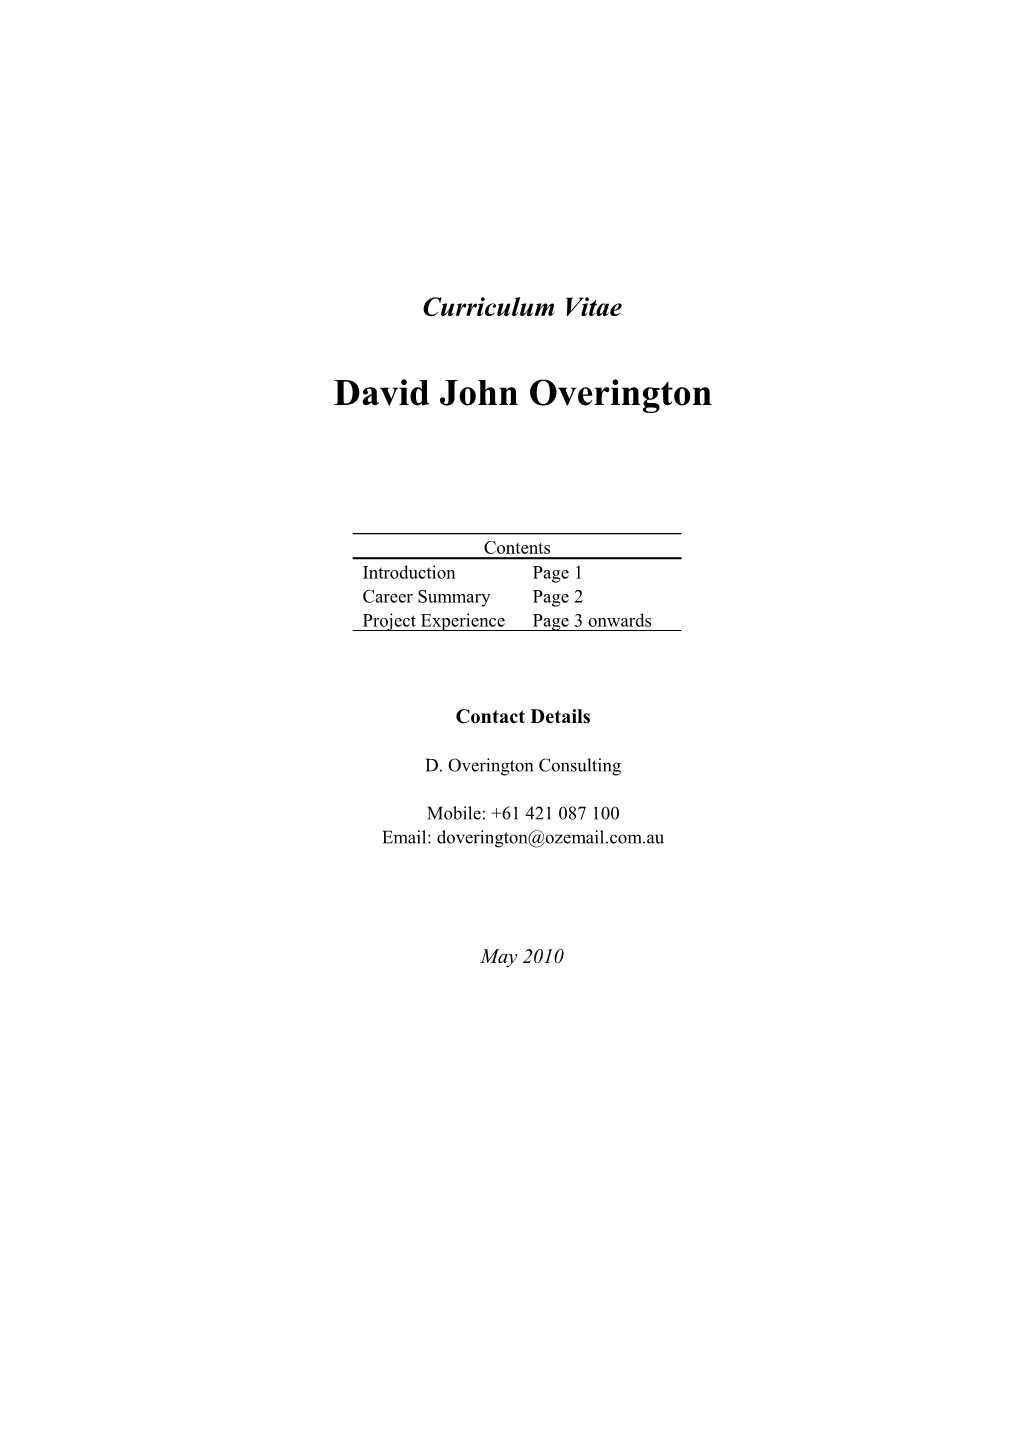 David Overington